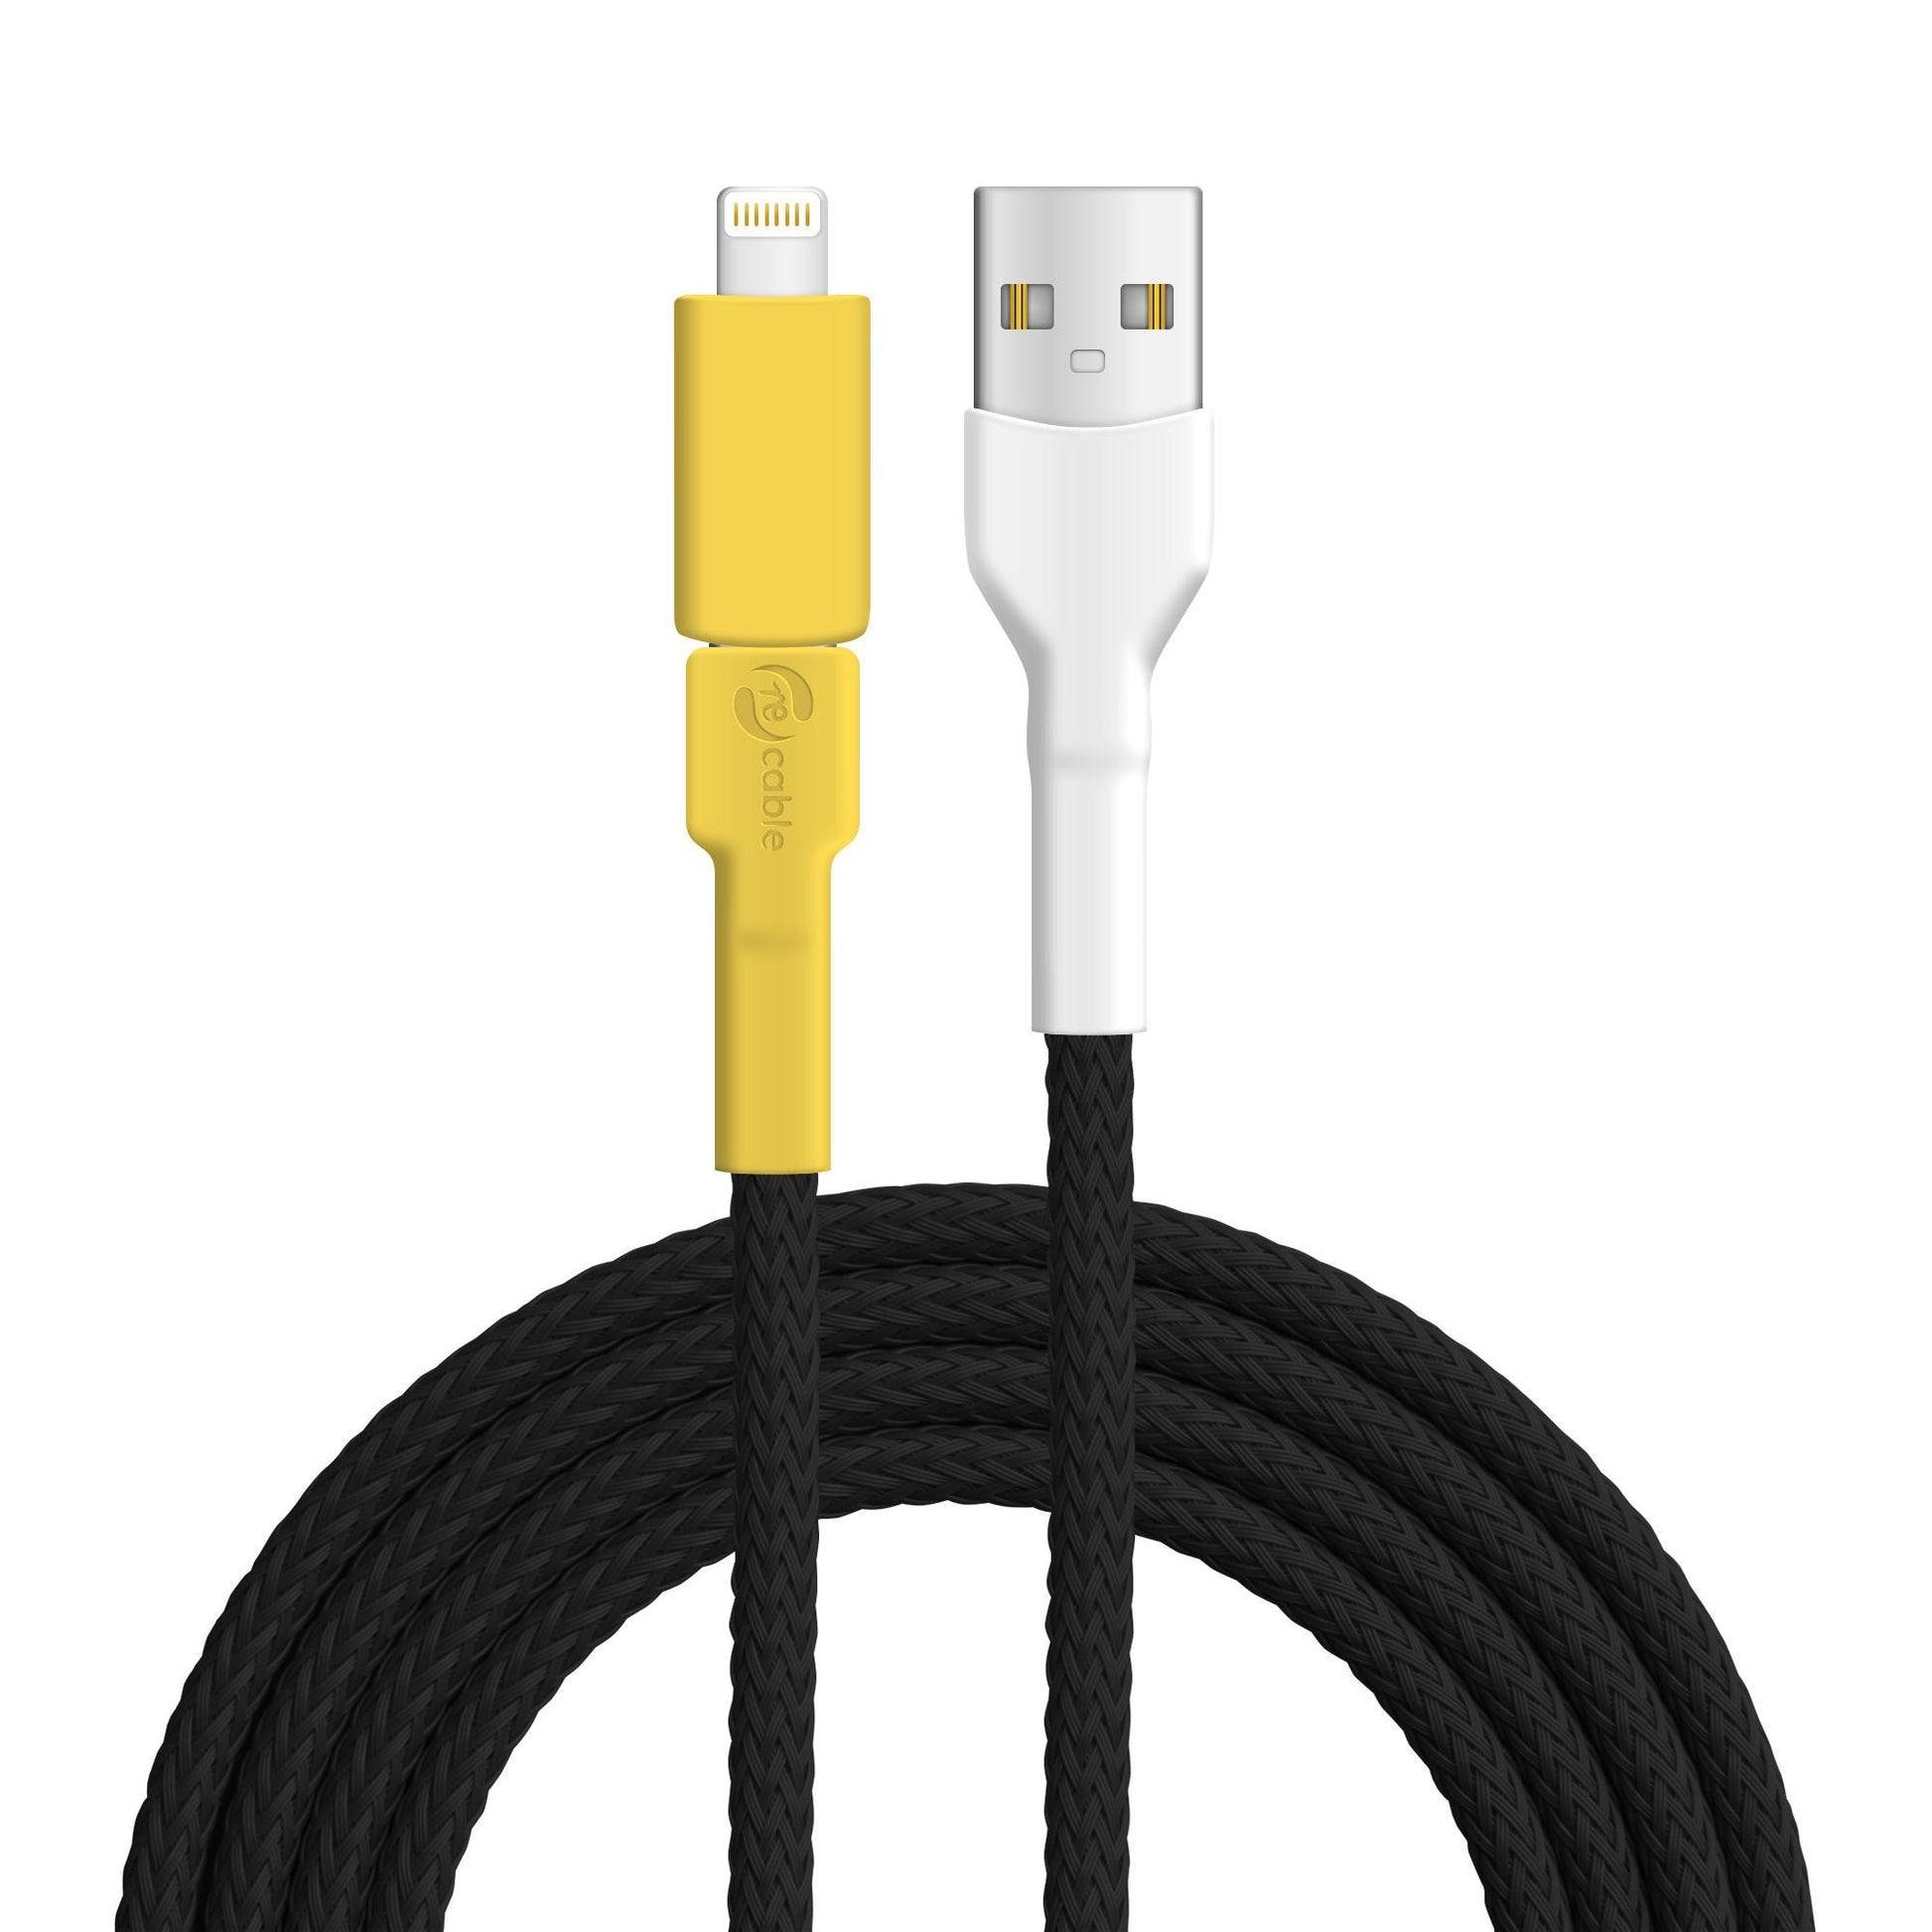 USB-Kabel, Design: Gold­schnäpper, Anschlüsse: USB A auf Micro-USB mit Lightning Adapter (verbunden)